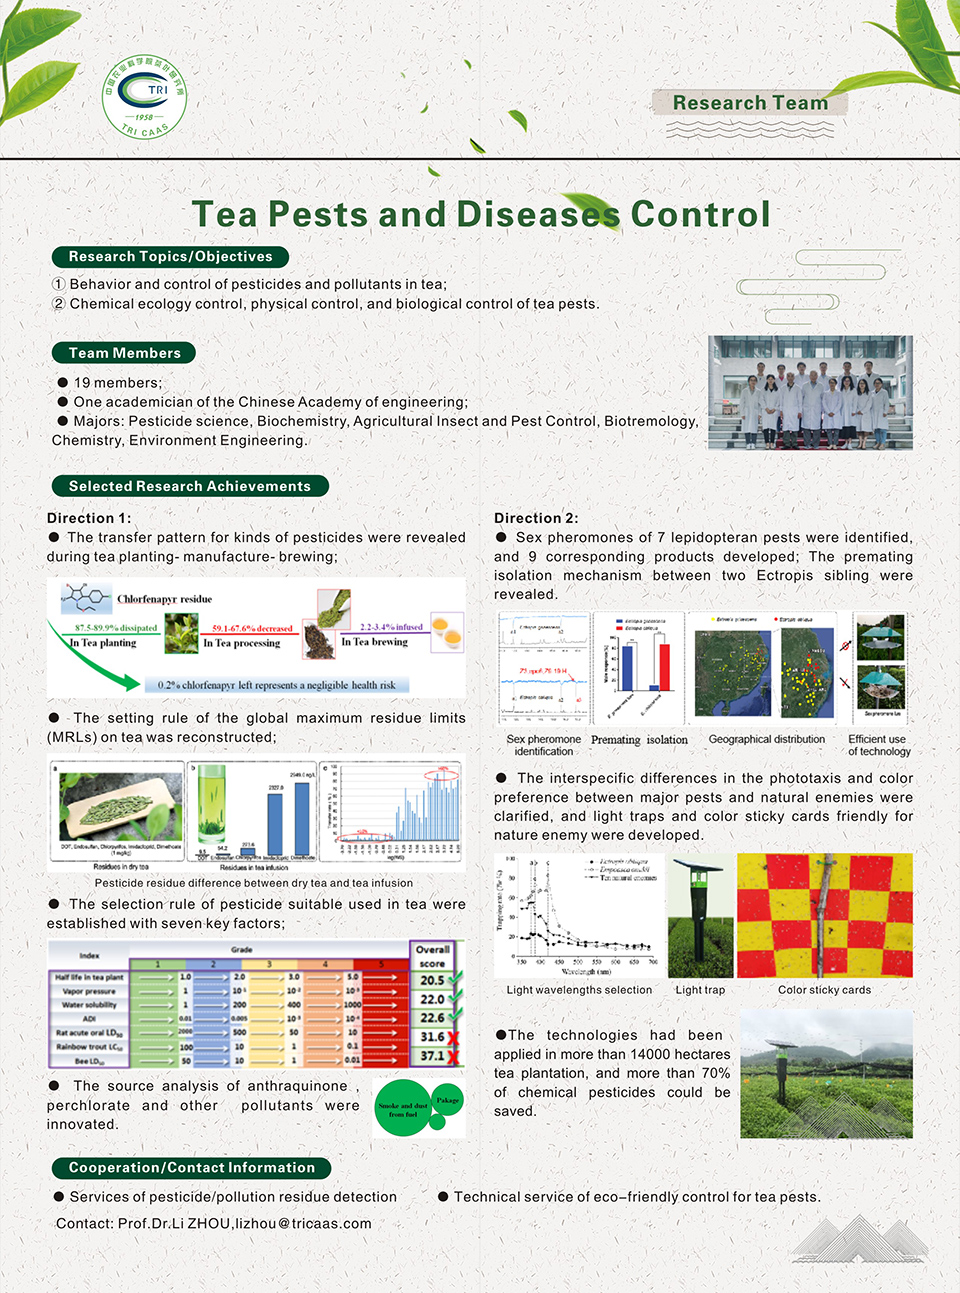 5-Tea Pests and Diseases Control.jpg